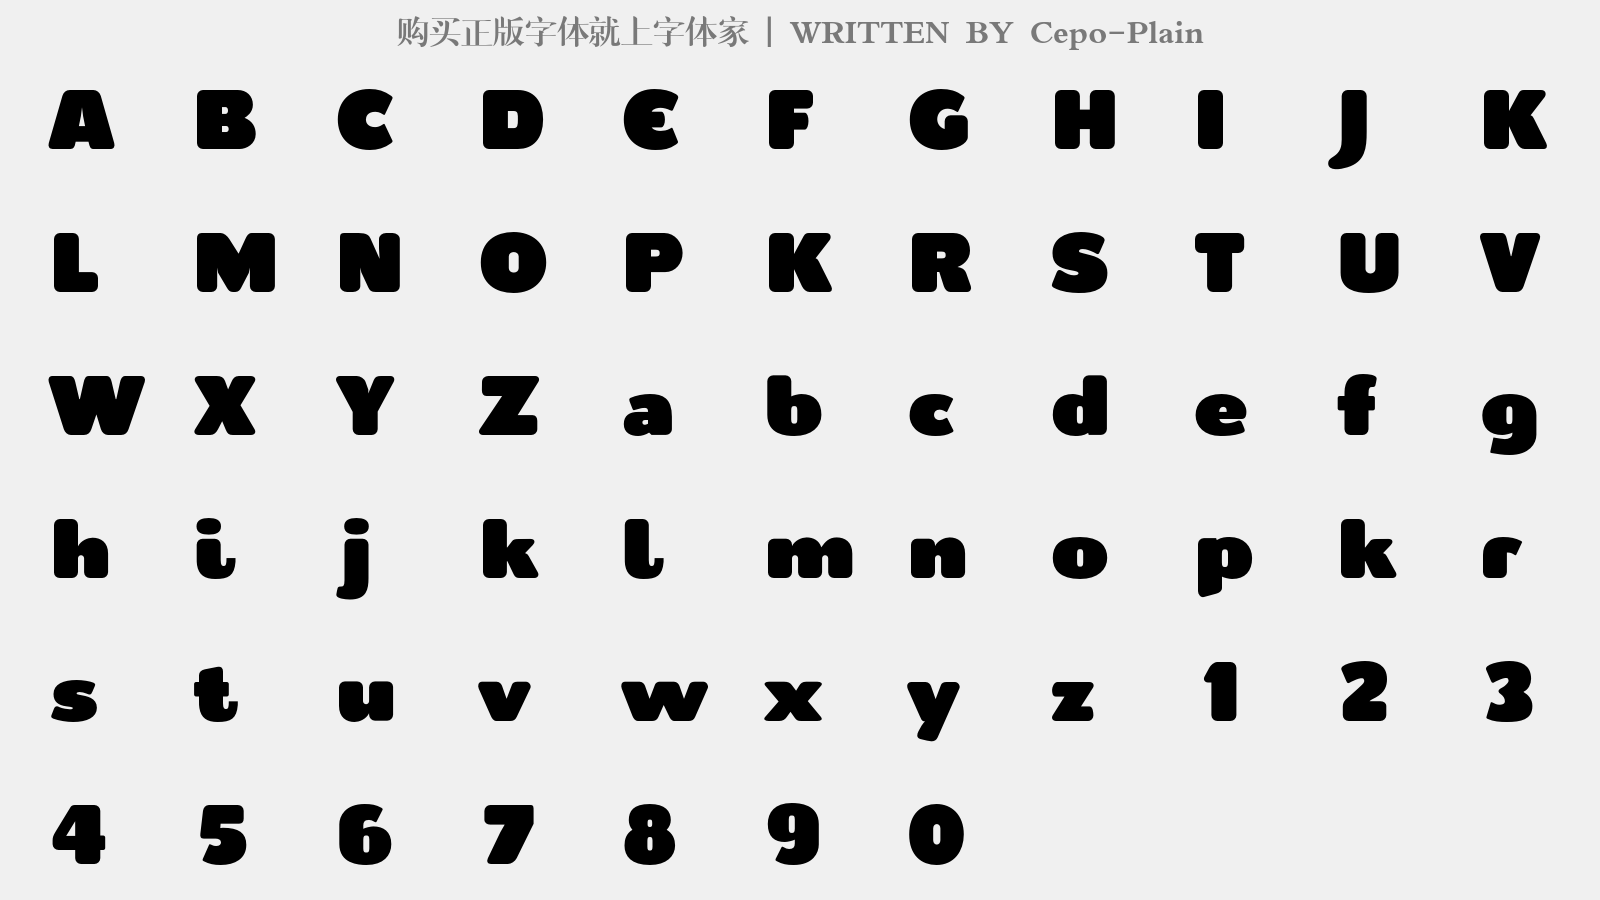 Cepo-Plain - 大写字母/小写字母/数字